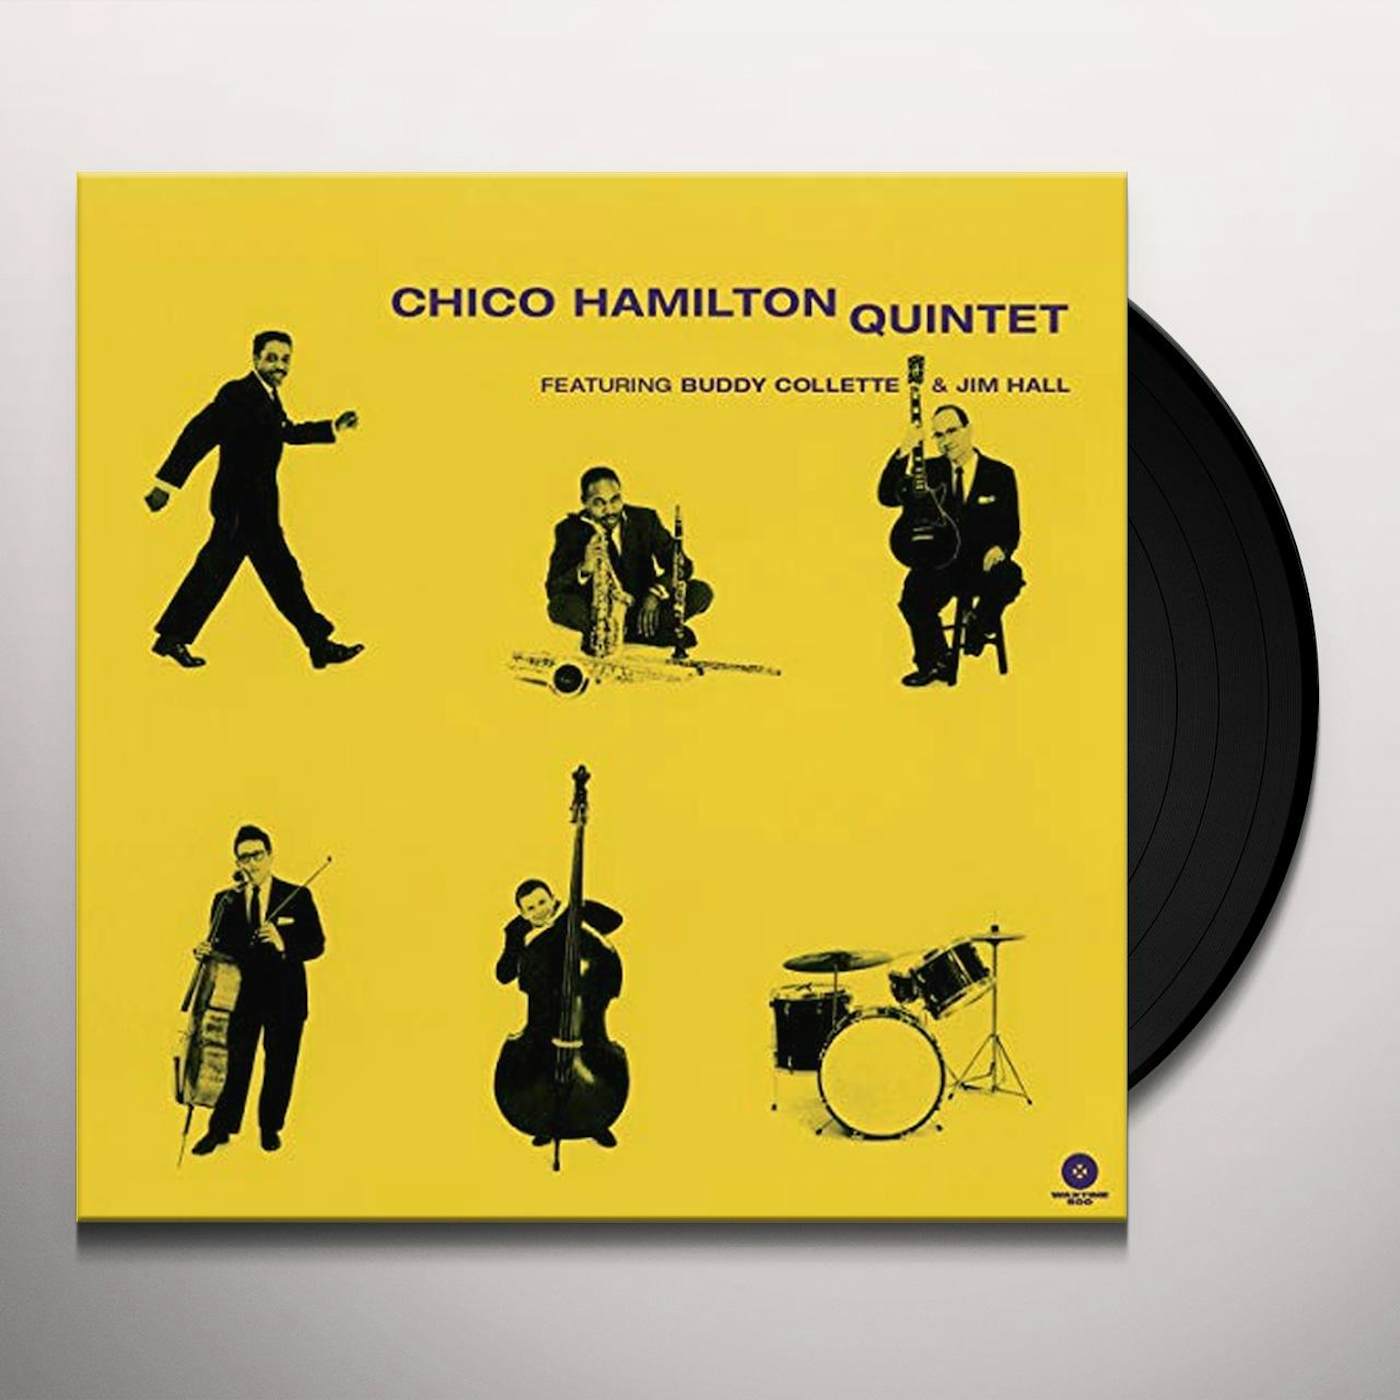 Chico Hamilton QUINTET (FEAT BUDDY COLLETTE & JIM HALL) Vinyl Record - Limited Edition